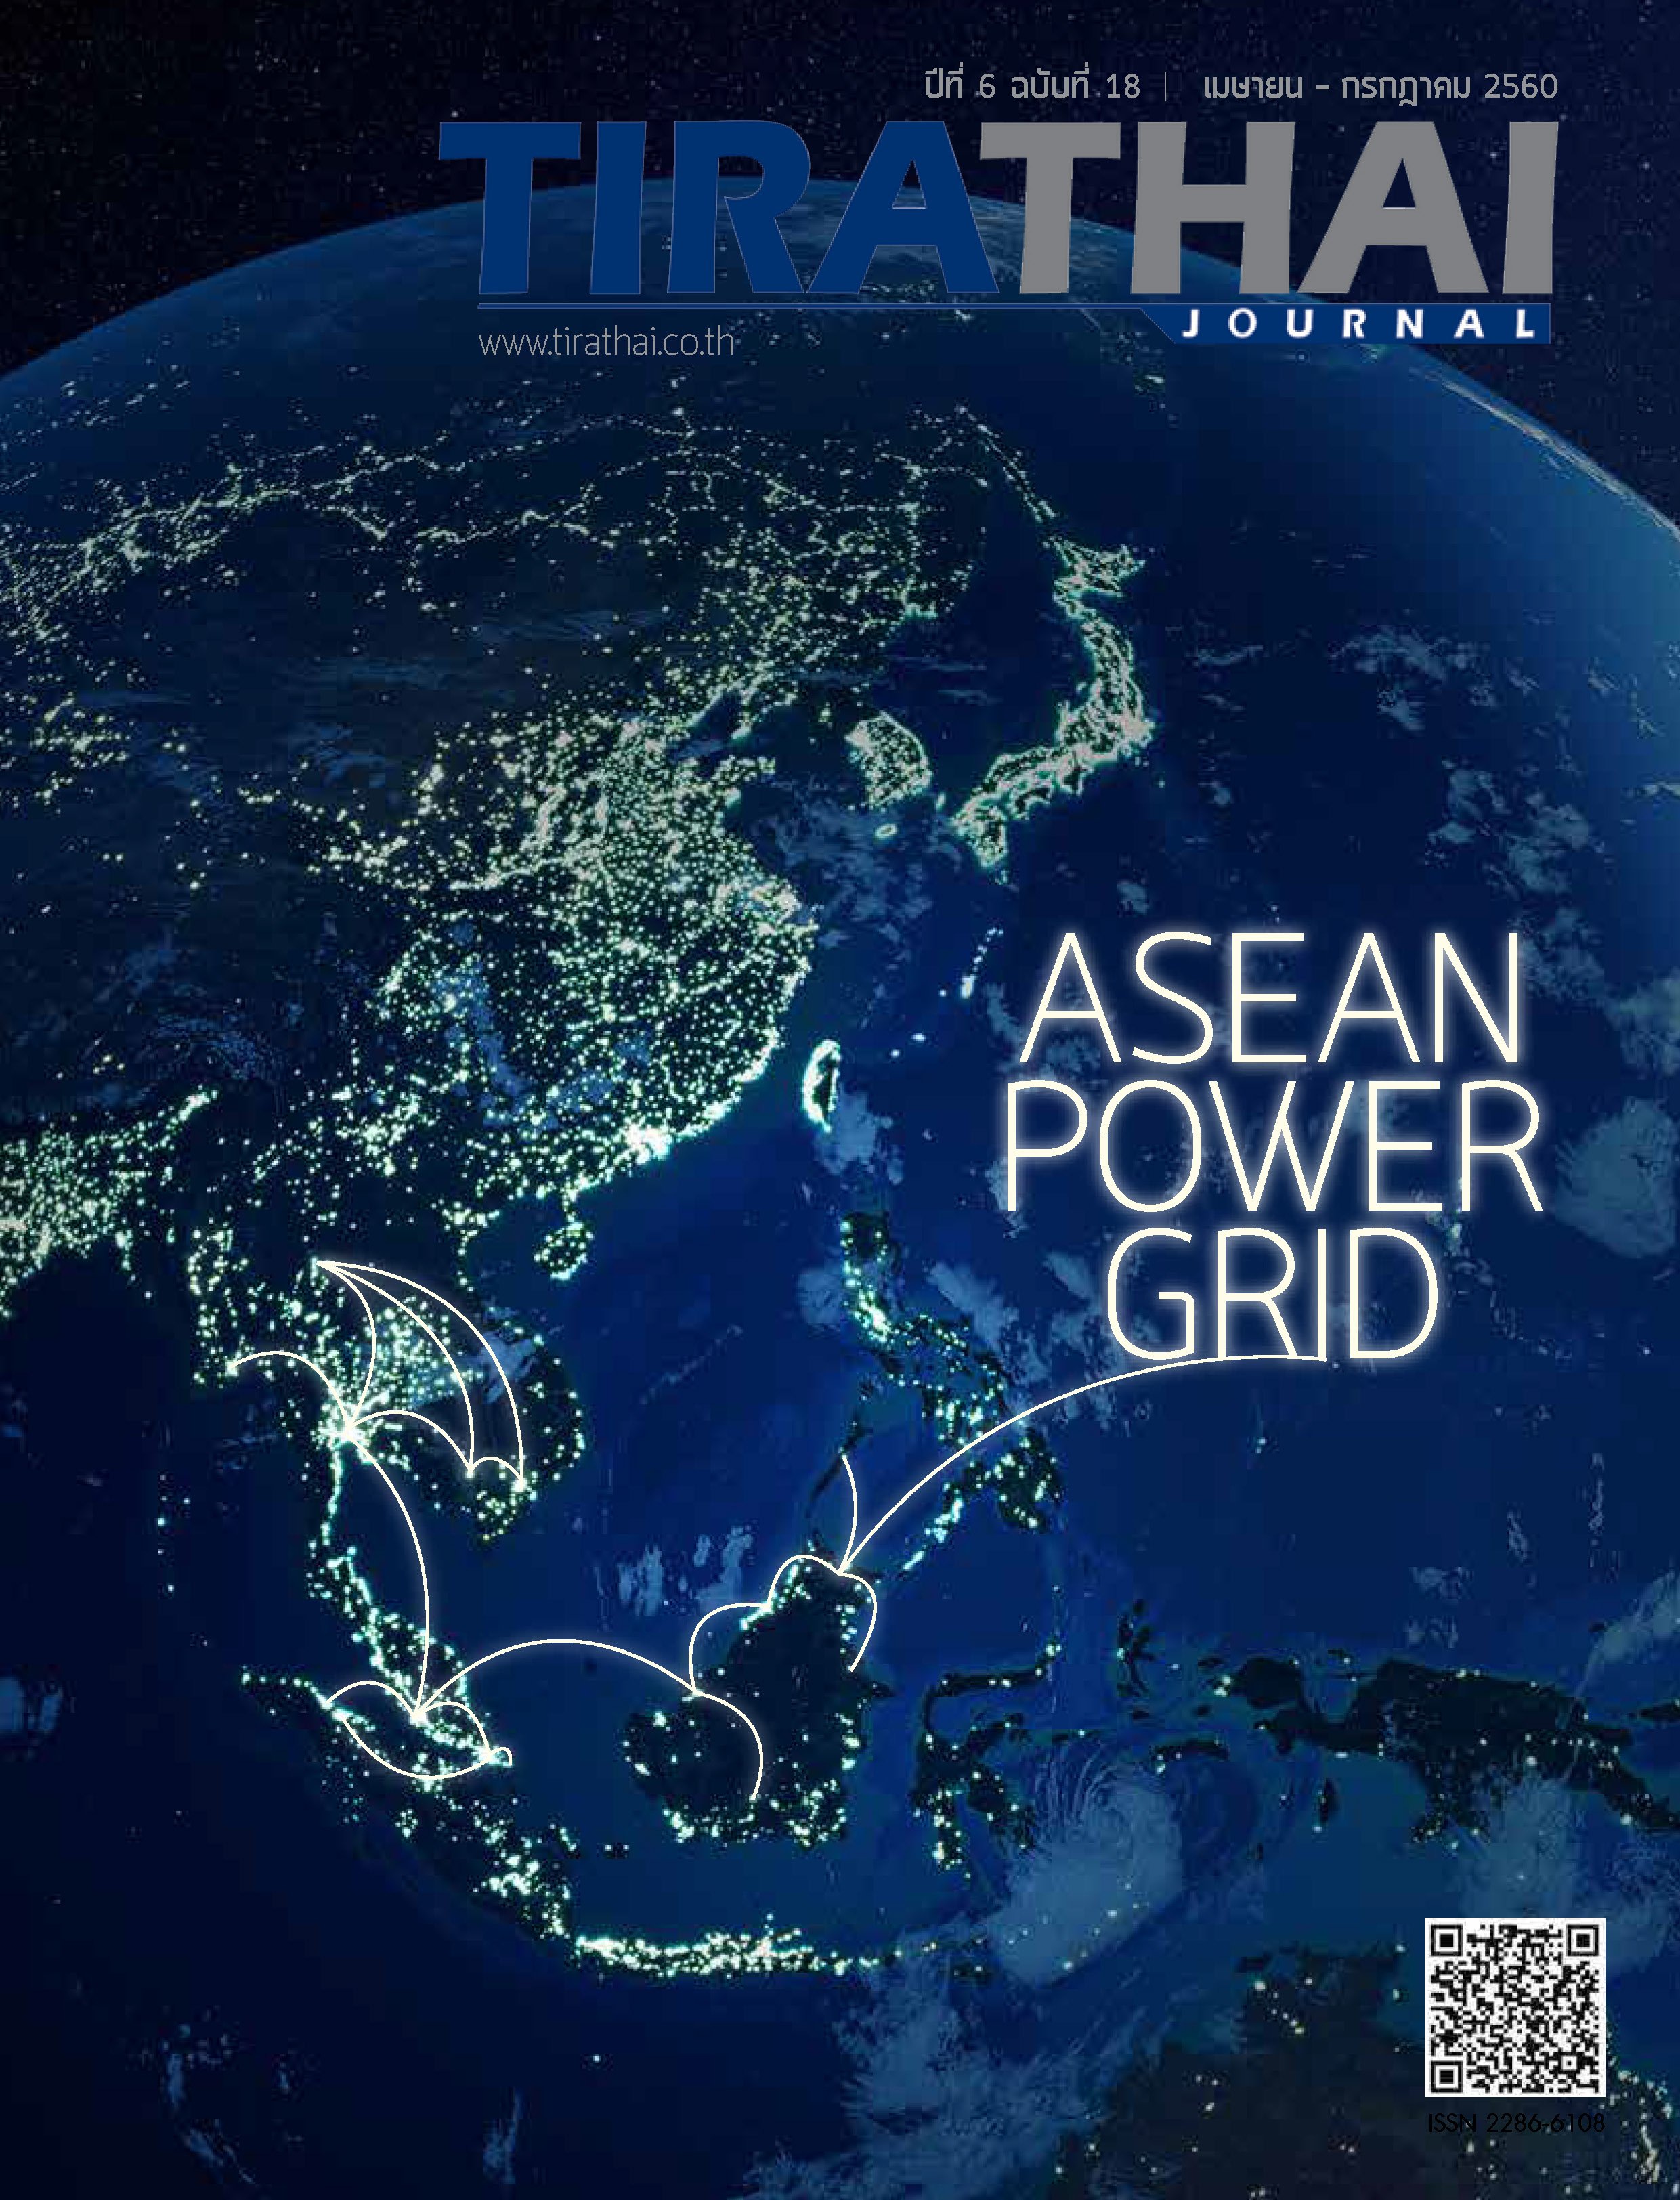 Asean Power Frid